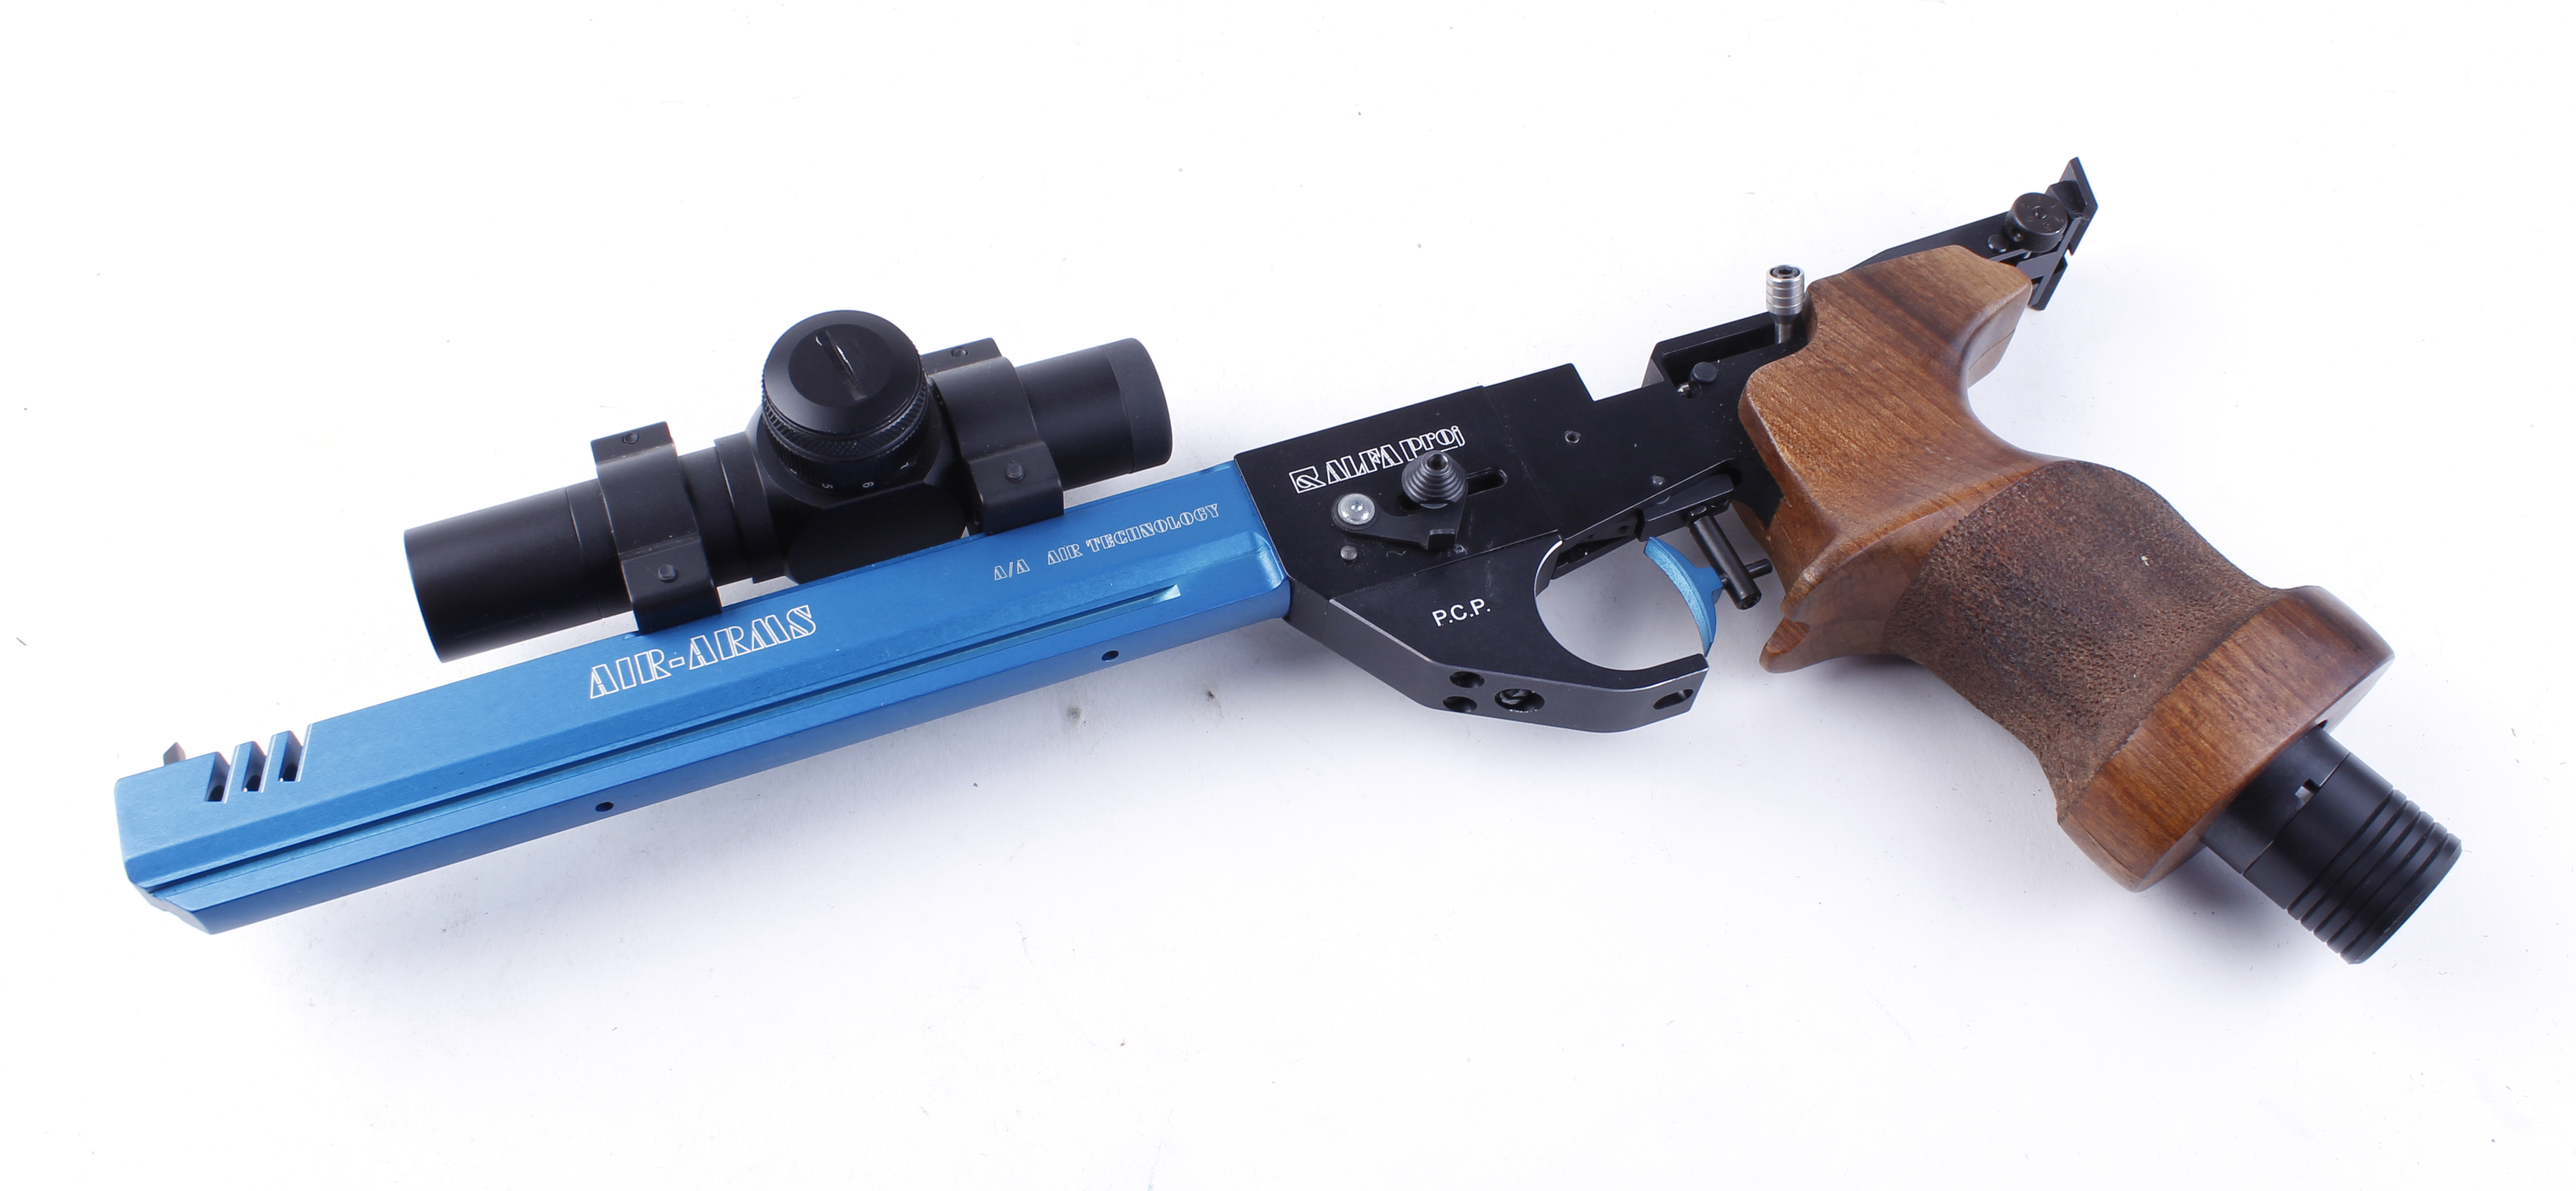 .177 Air Arms Alfa Proj PCP target air pistol, ergonomic wood grips, Hawke Sport Dot sight with